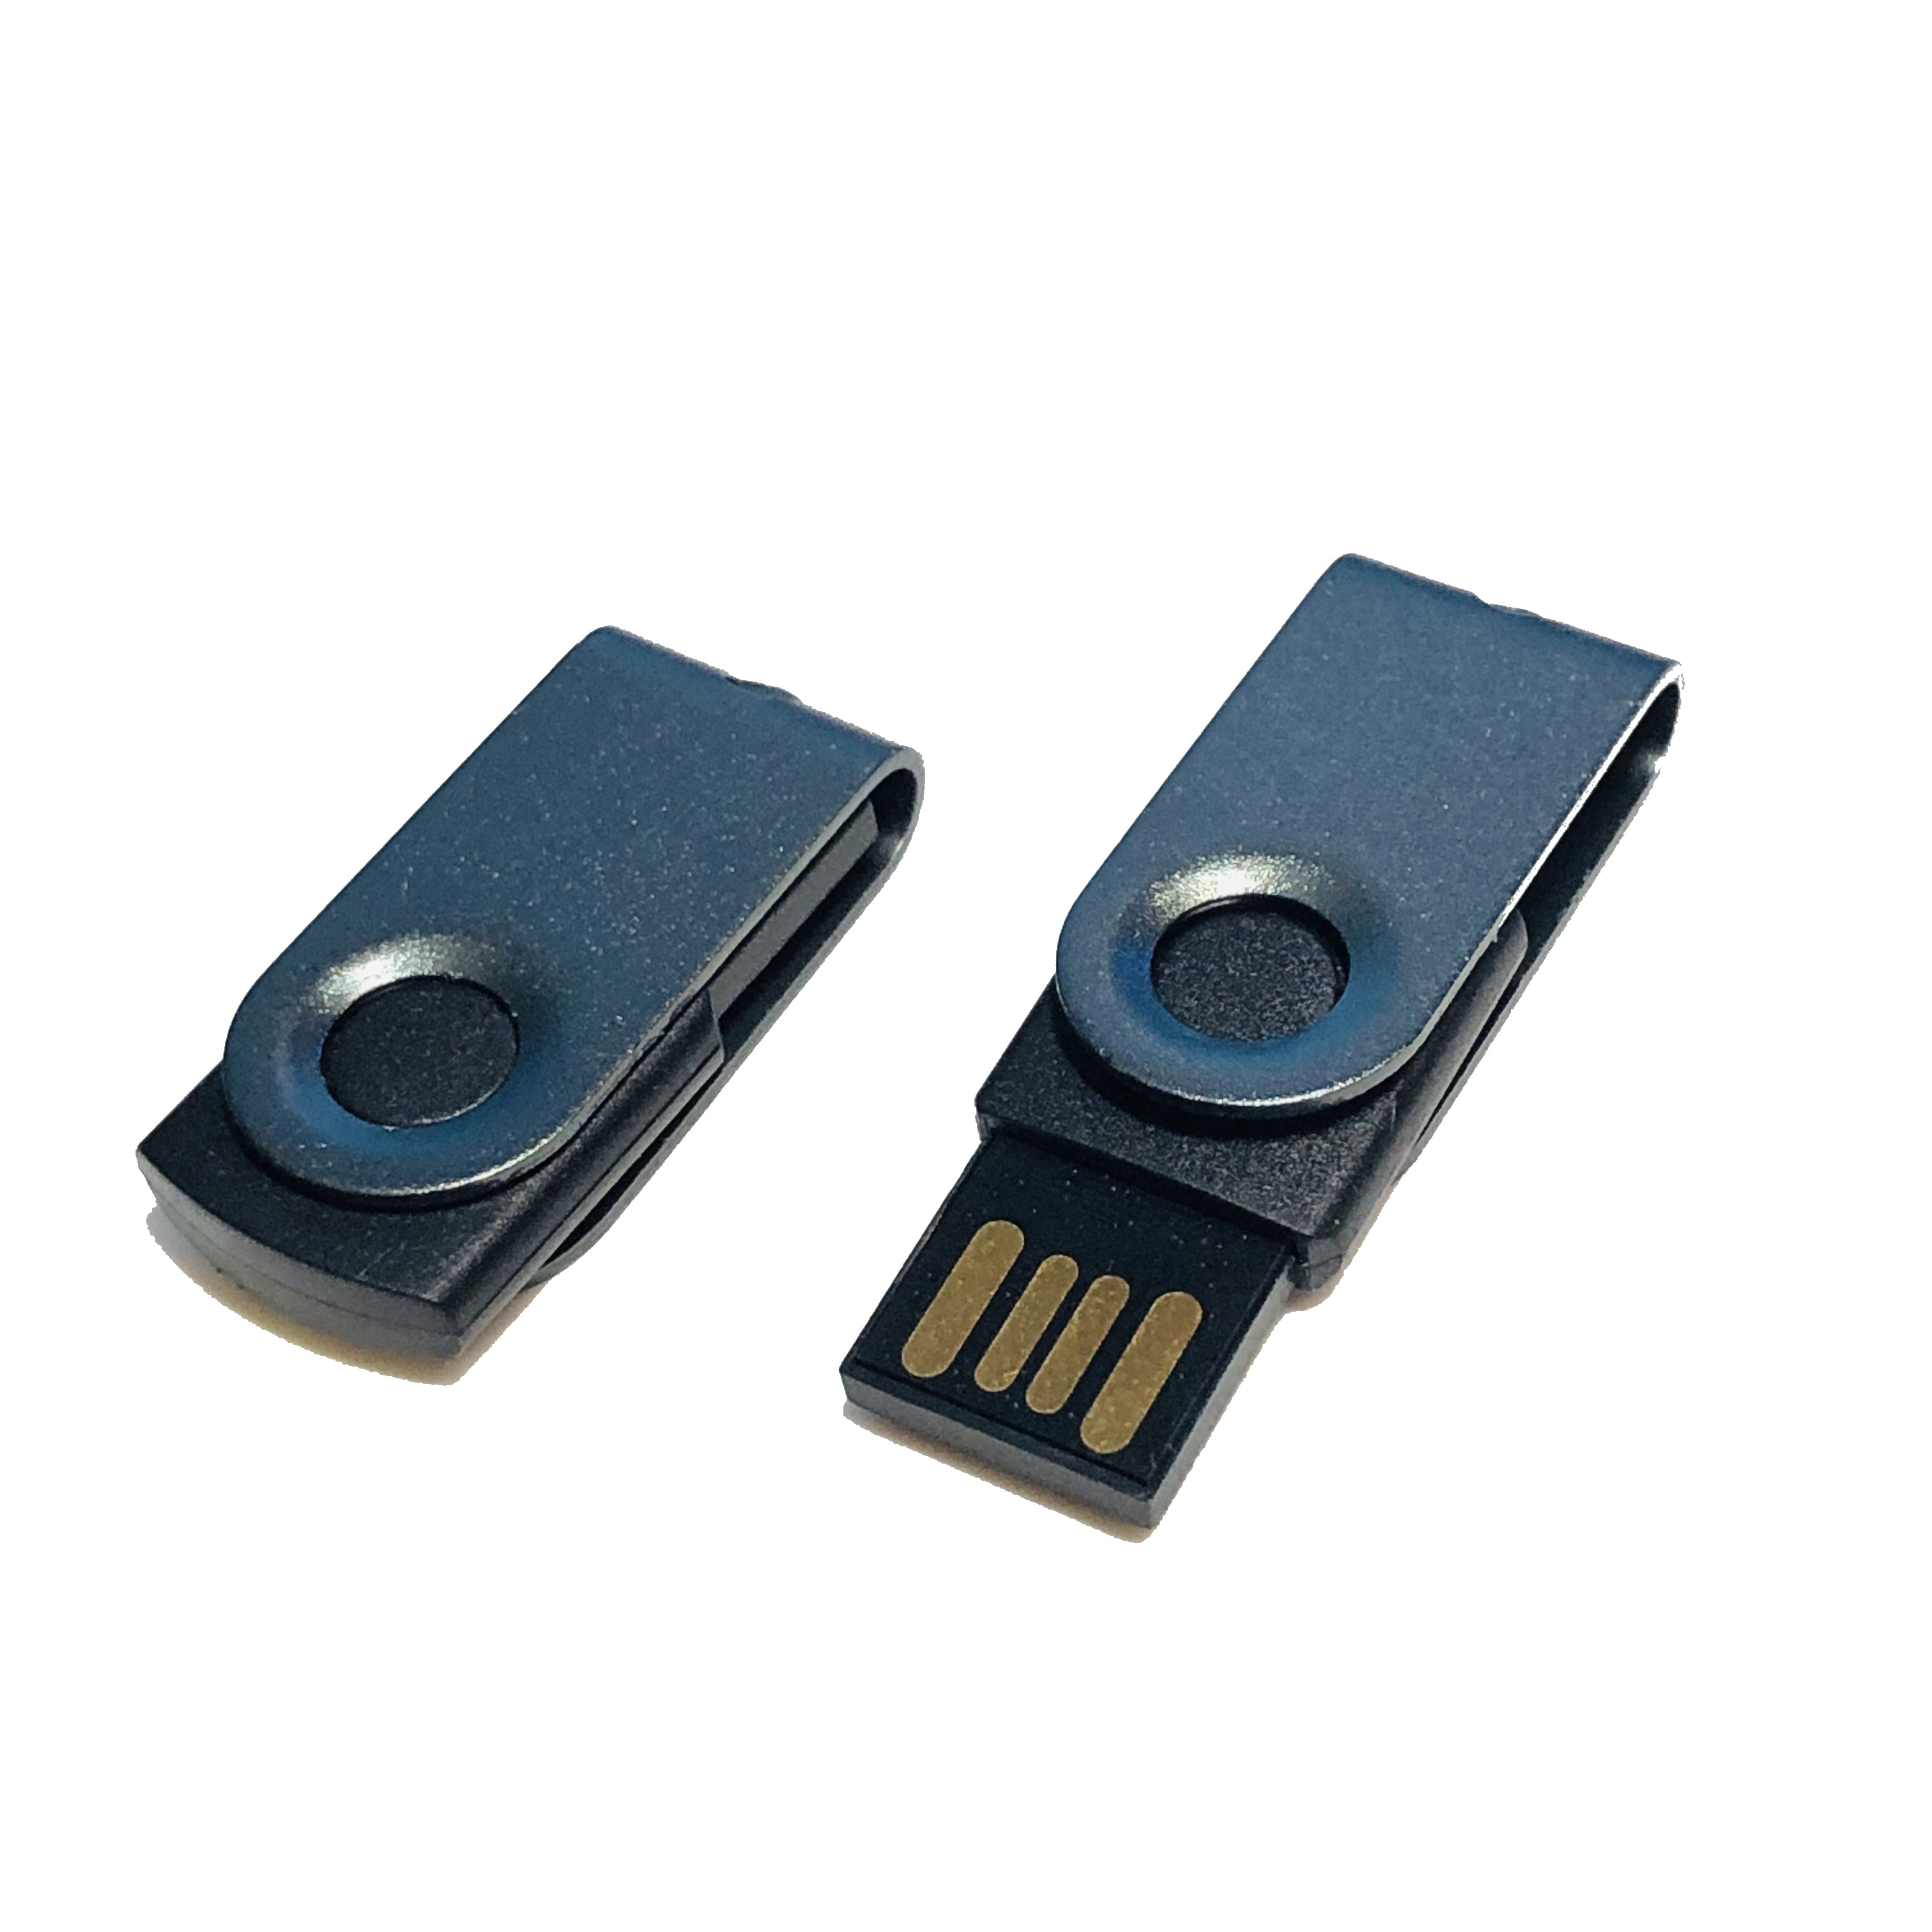 GERMANY (Schwarz-Graumetall, MINI-SWIVEL USB GB) ® 32 USB-Stick